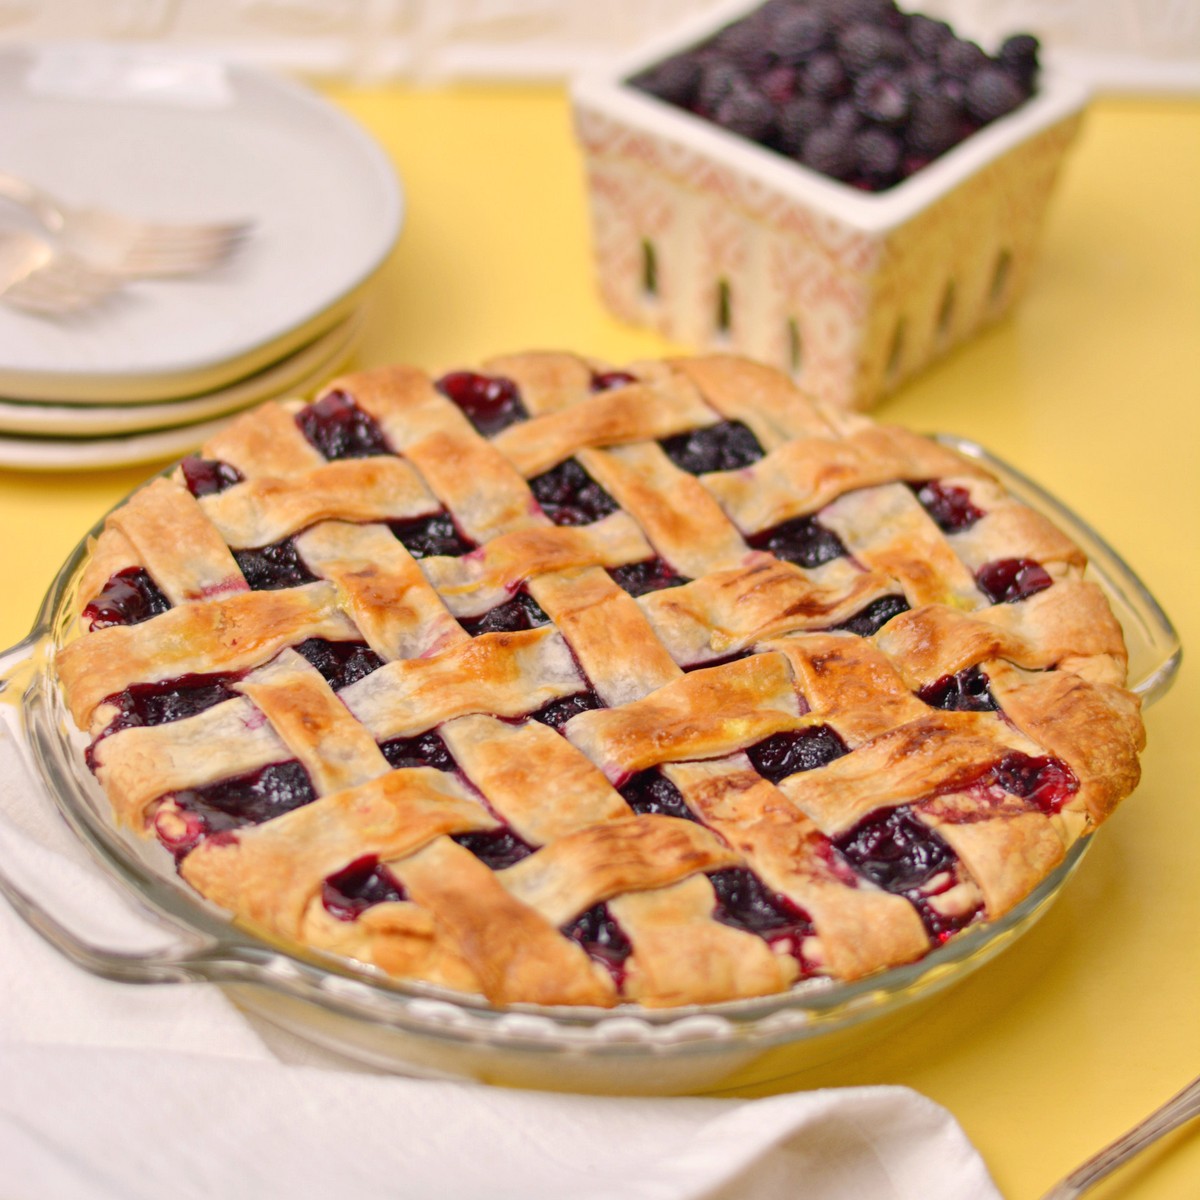 Black Raspeberry pie with latticed crust on top.